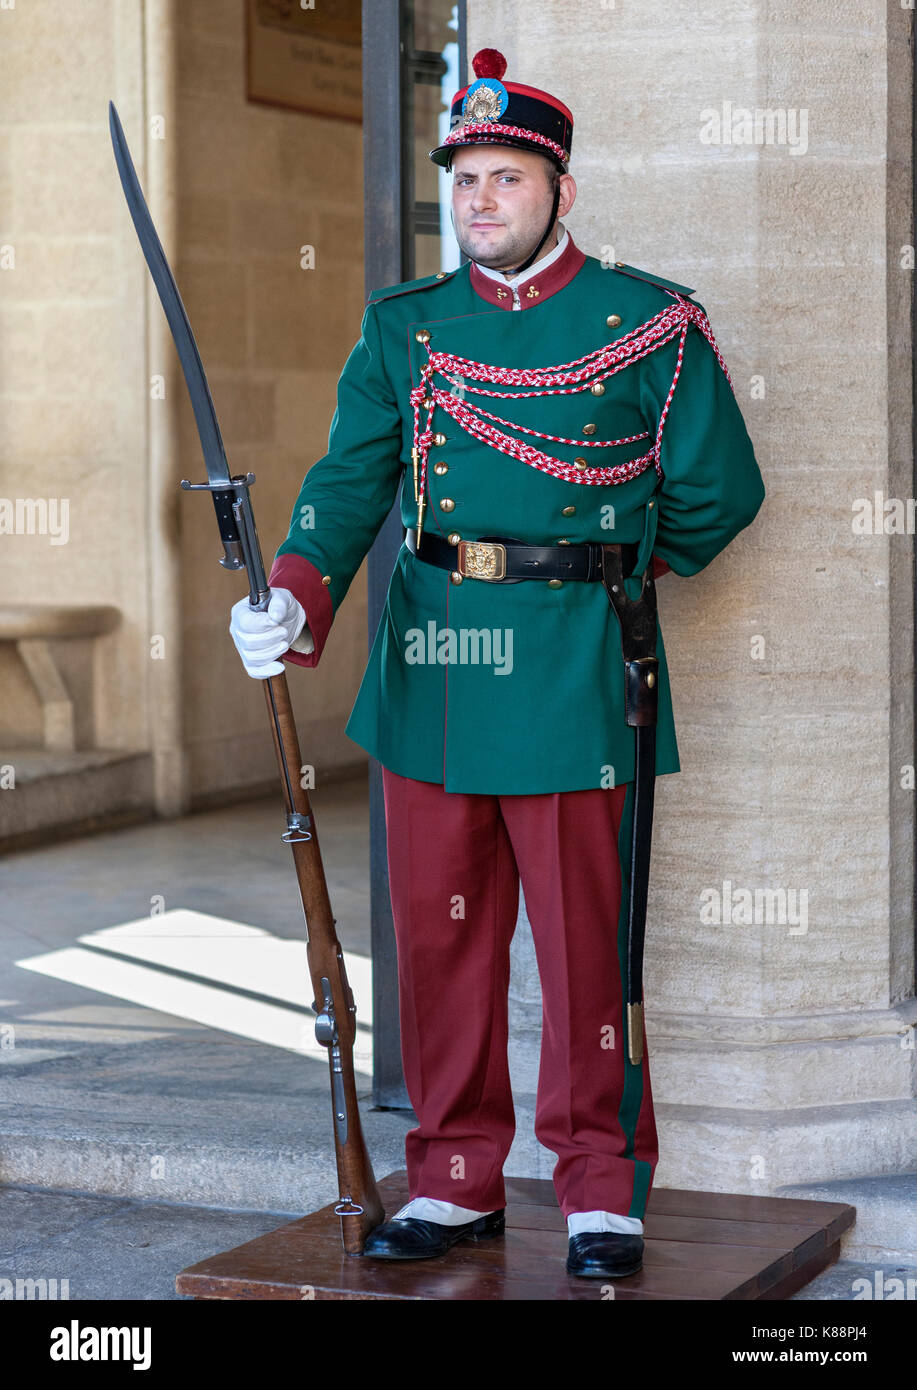 Uniformierte Wache vor dem Palazzo Pubblico (Palast), San Marino. Stockfoto